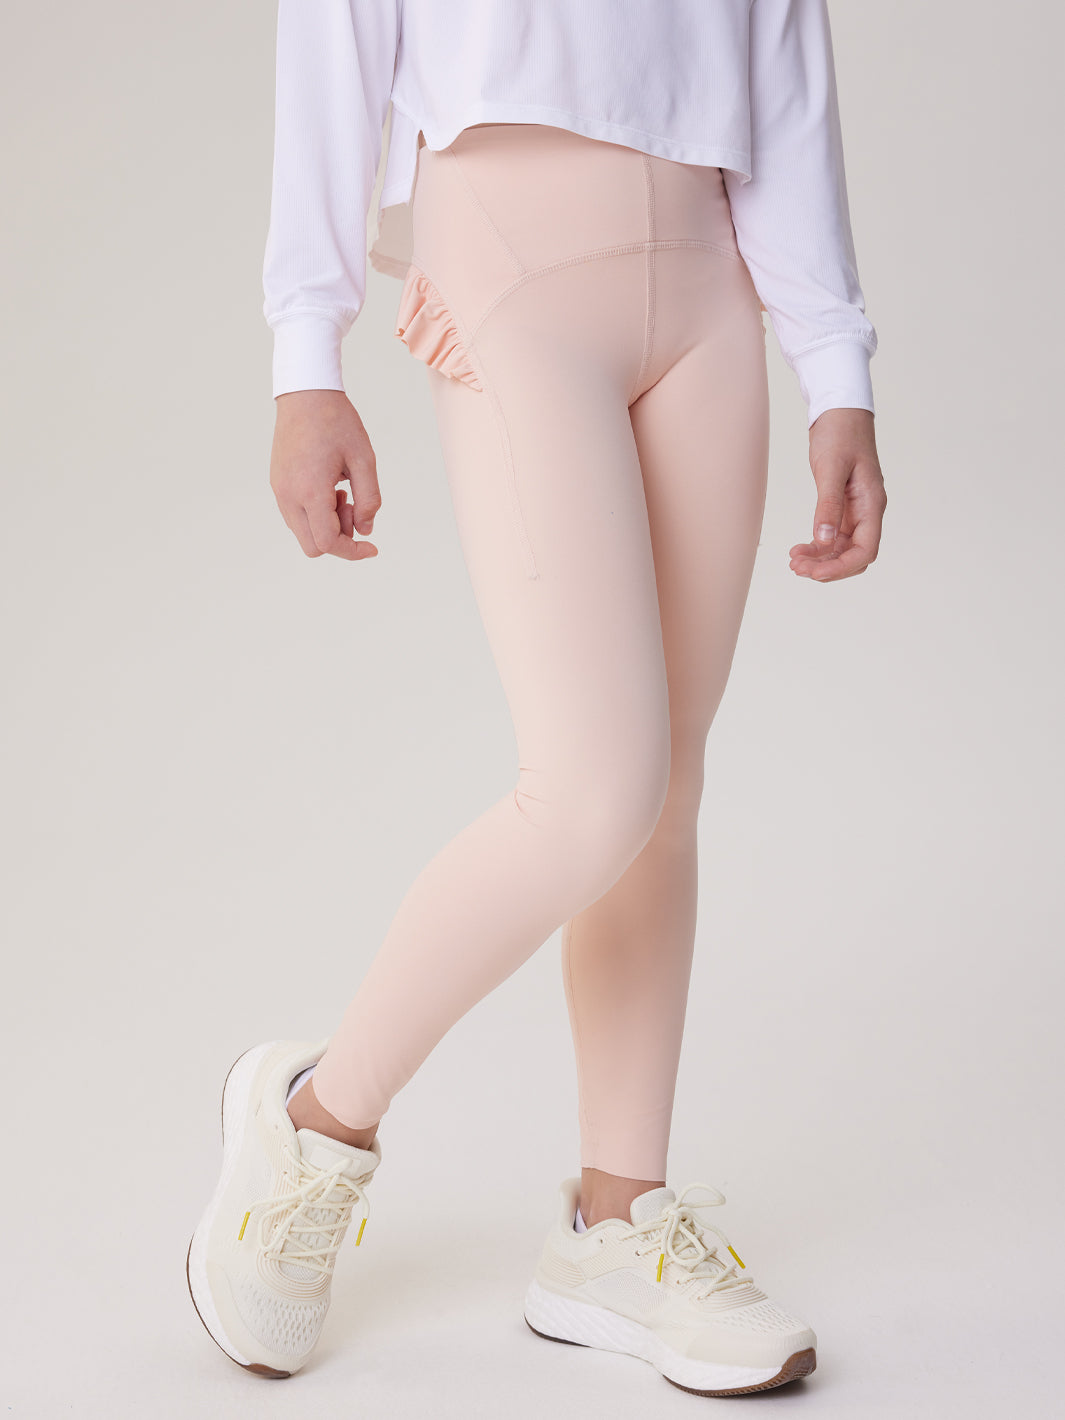 Kiench Girls' Winter Warm Leggings with Skirt Ruffle Flare Cotton